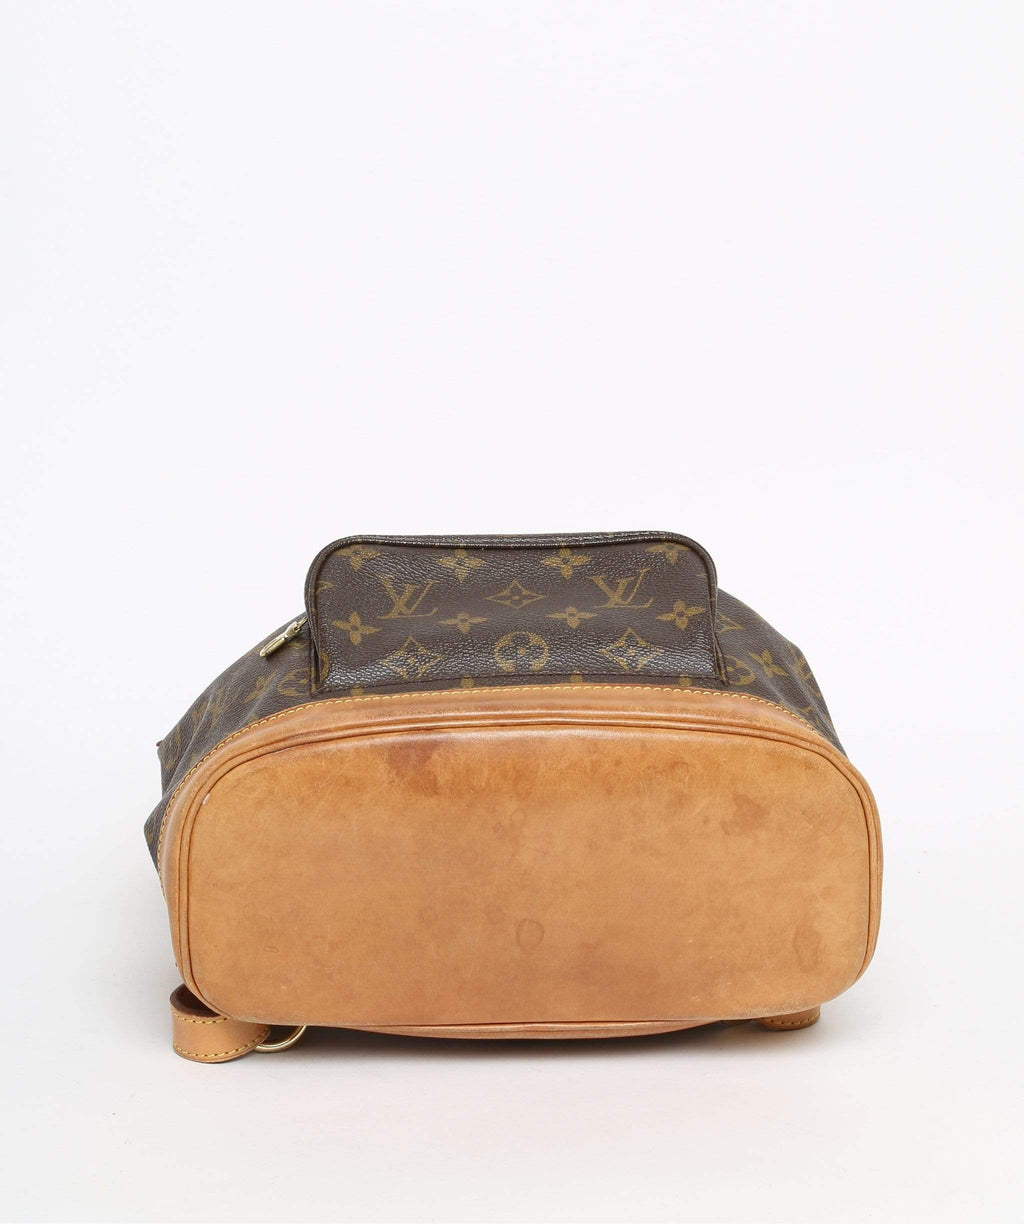 Louis Vuitton Coming - S. P. School Bag